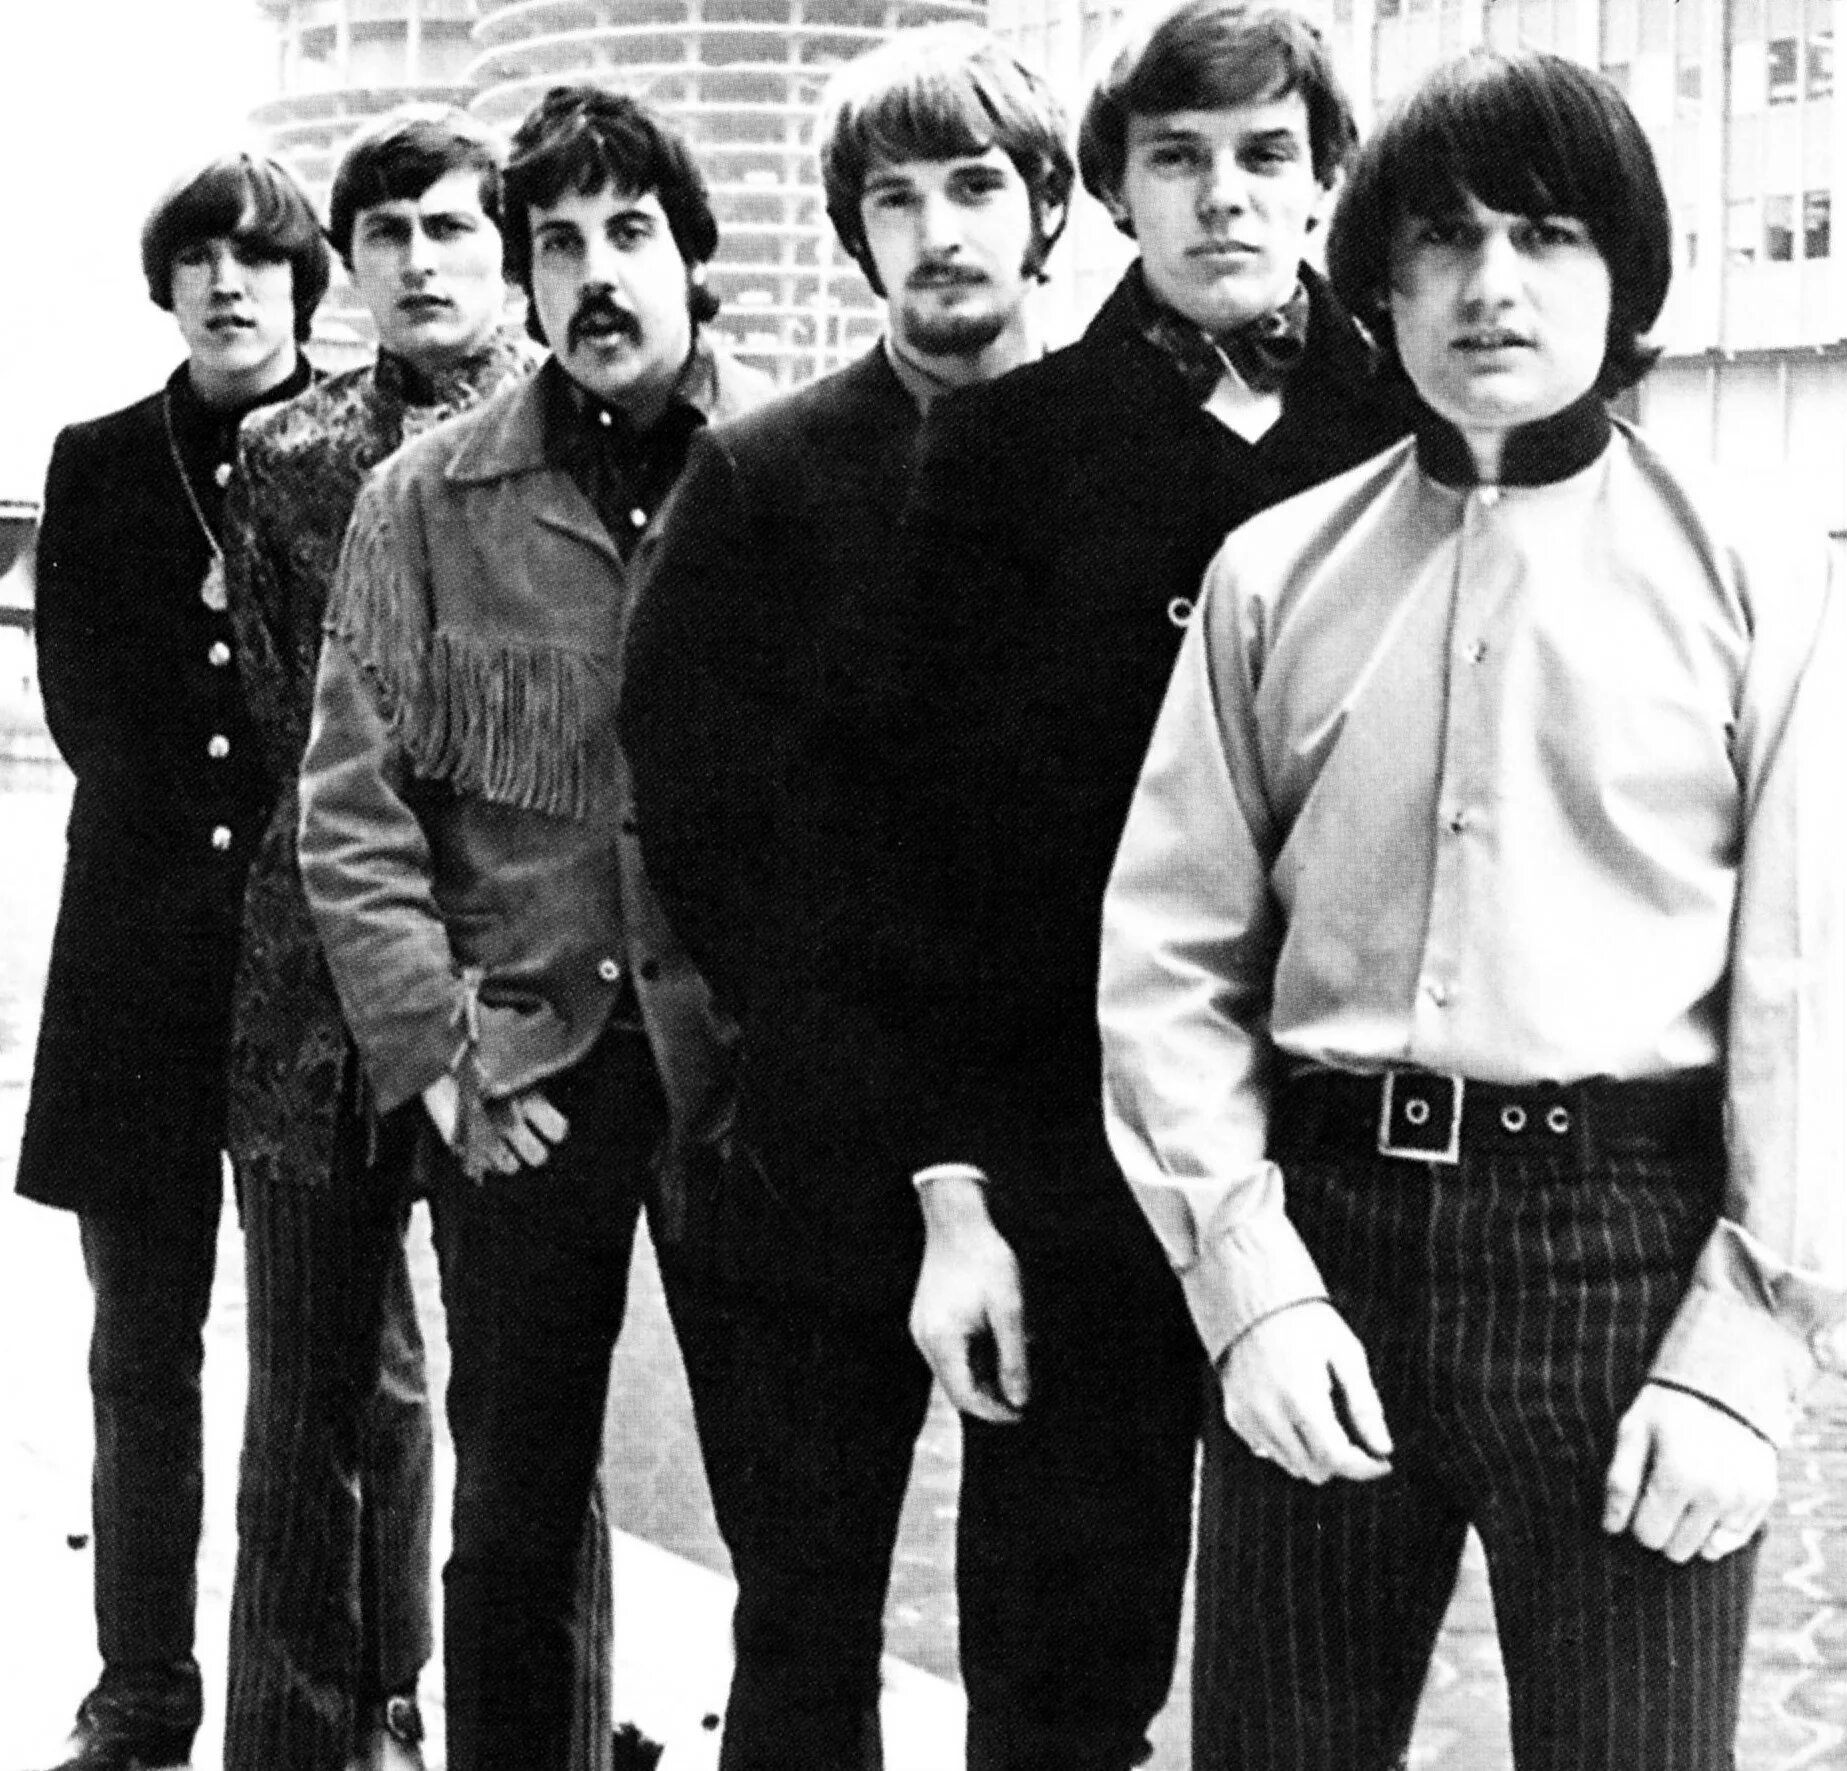 The new six группа. New Colony Six Band. The Six группа. Рок группа 1968. The Six группа 1977.